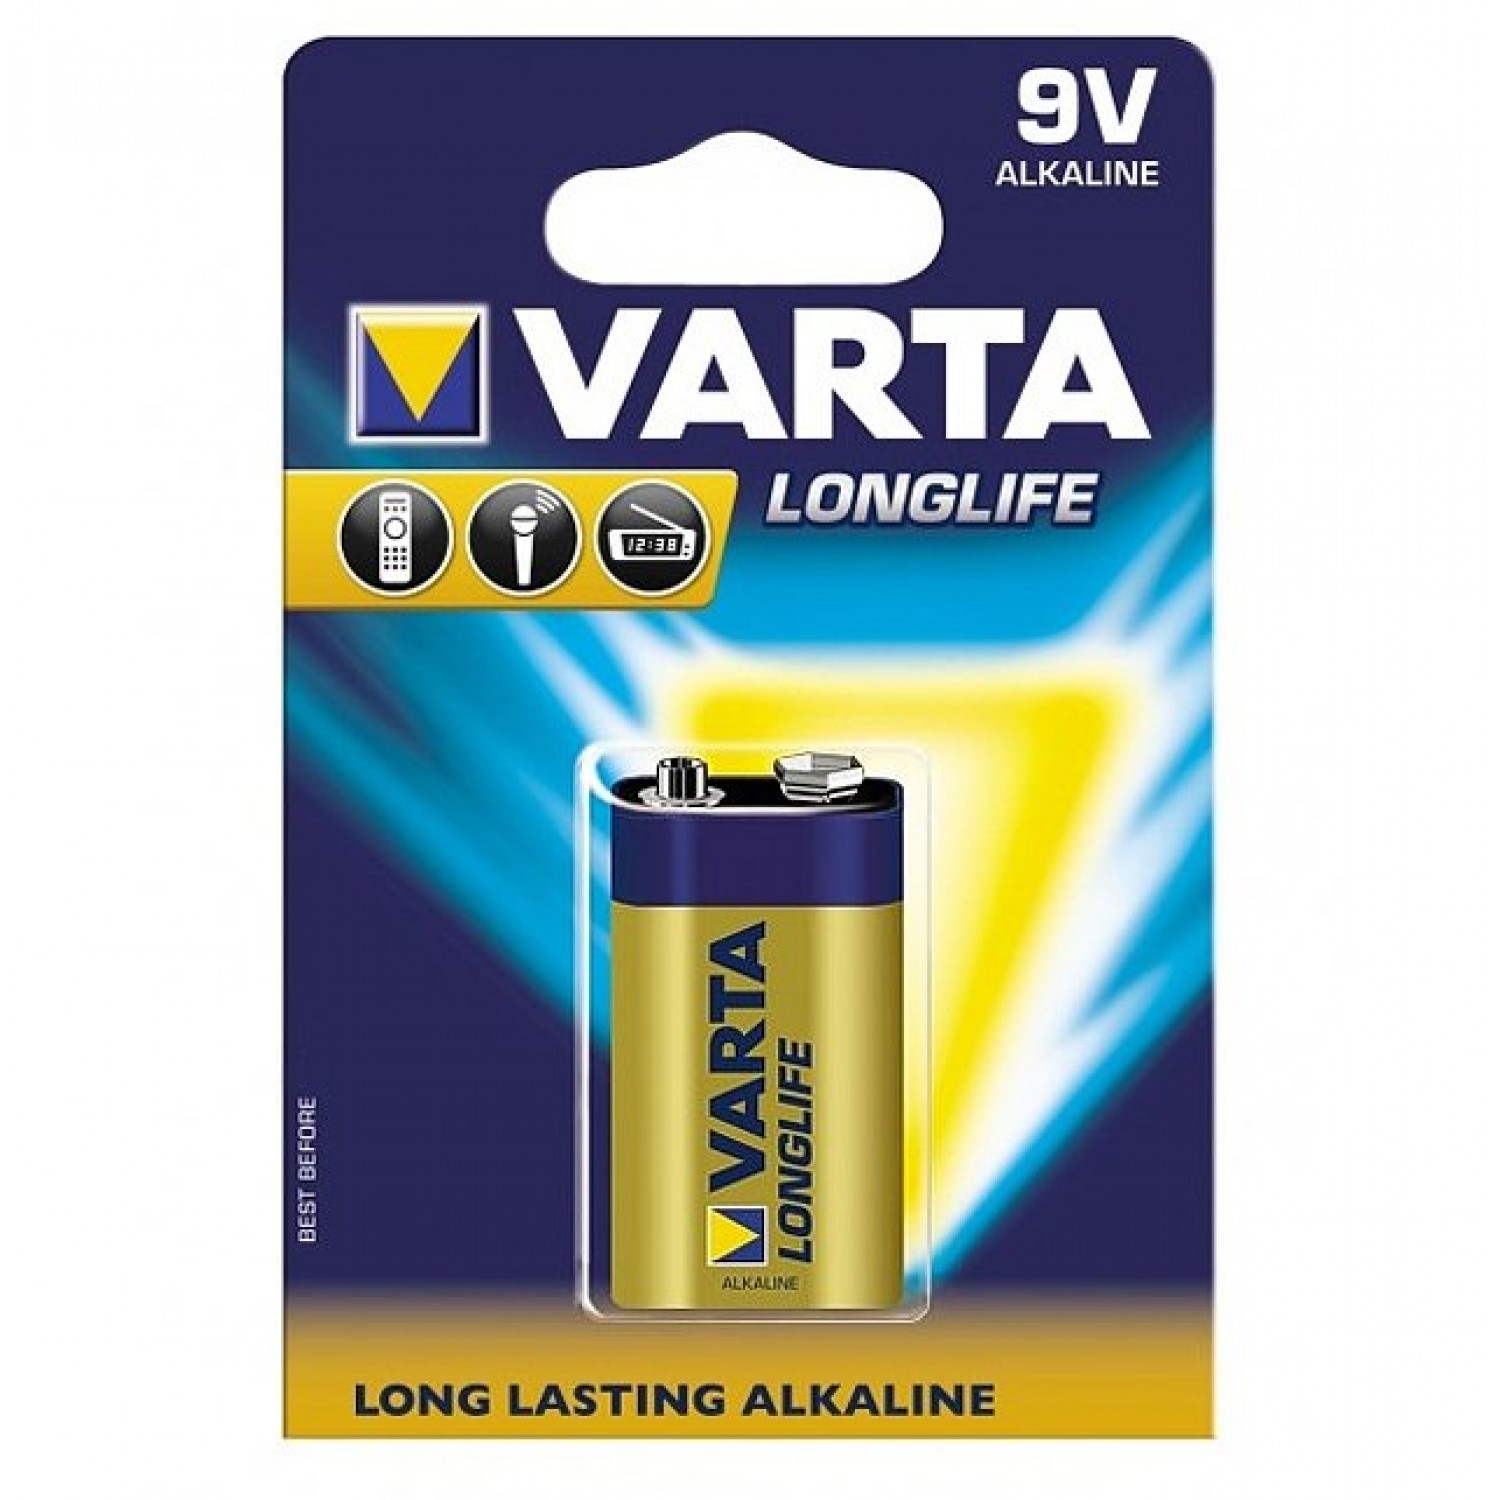 Varta 9V Long Life Alkaline Battery |kipogeorgiki.gr 